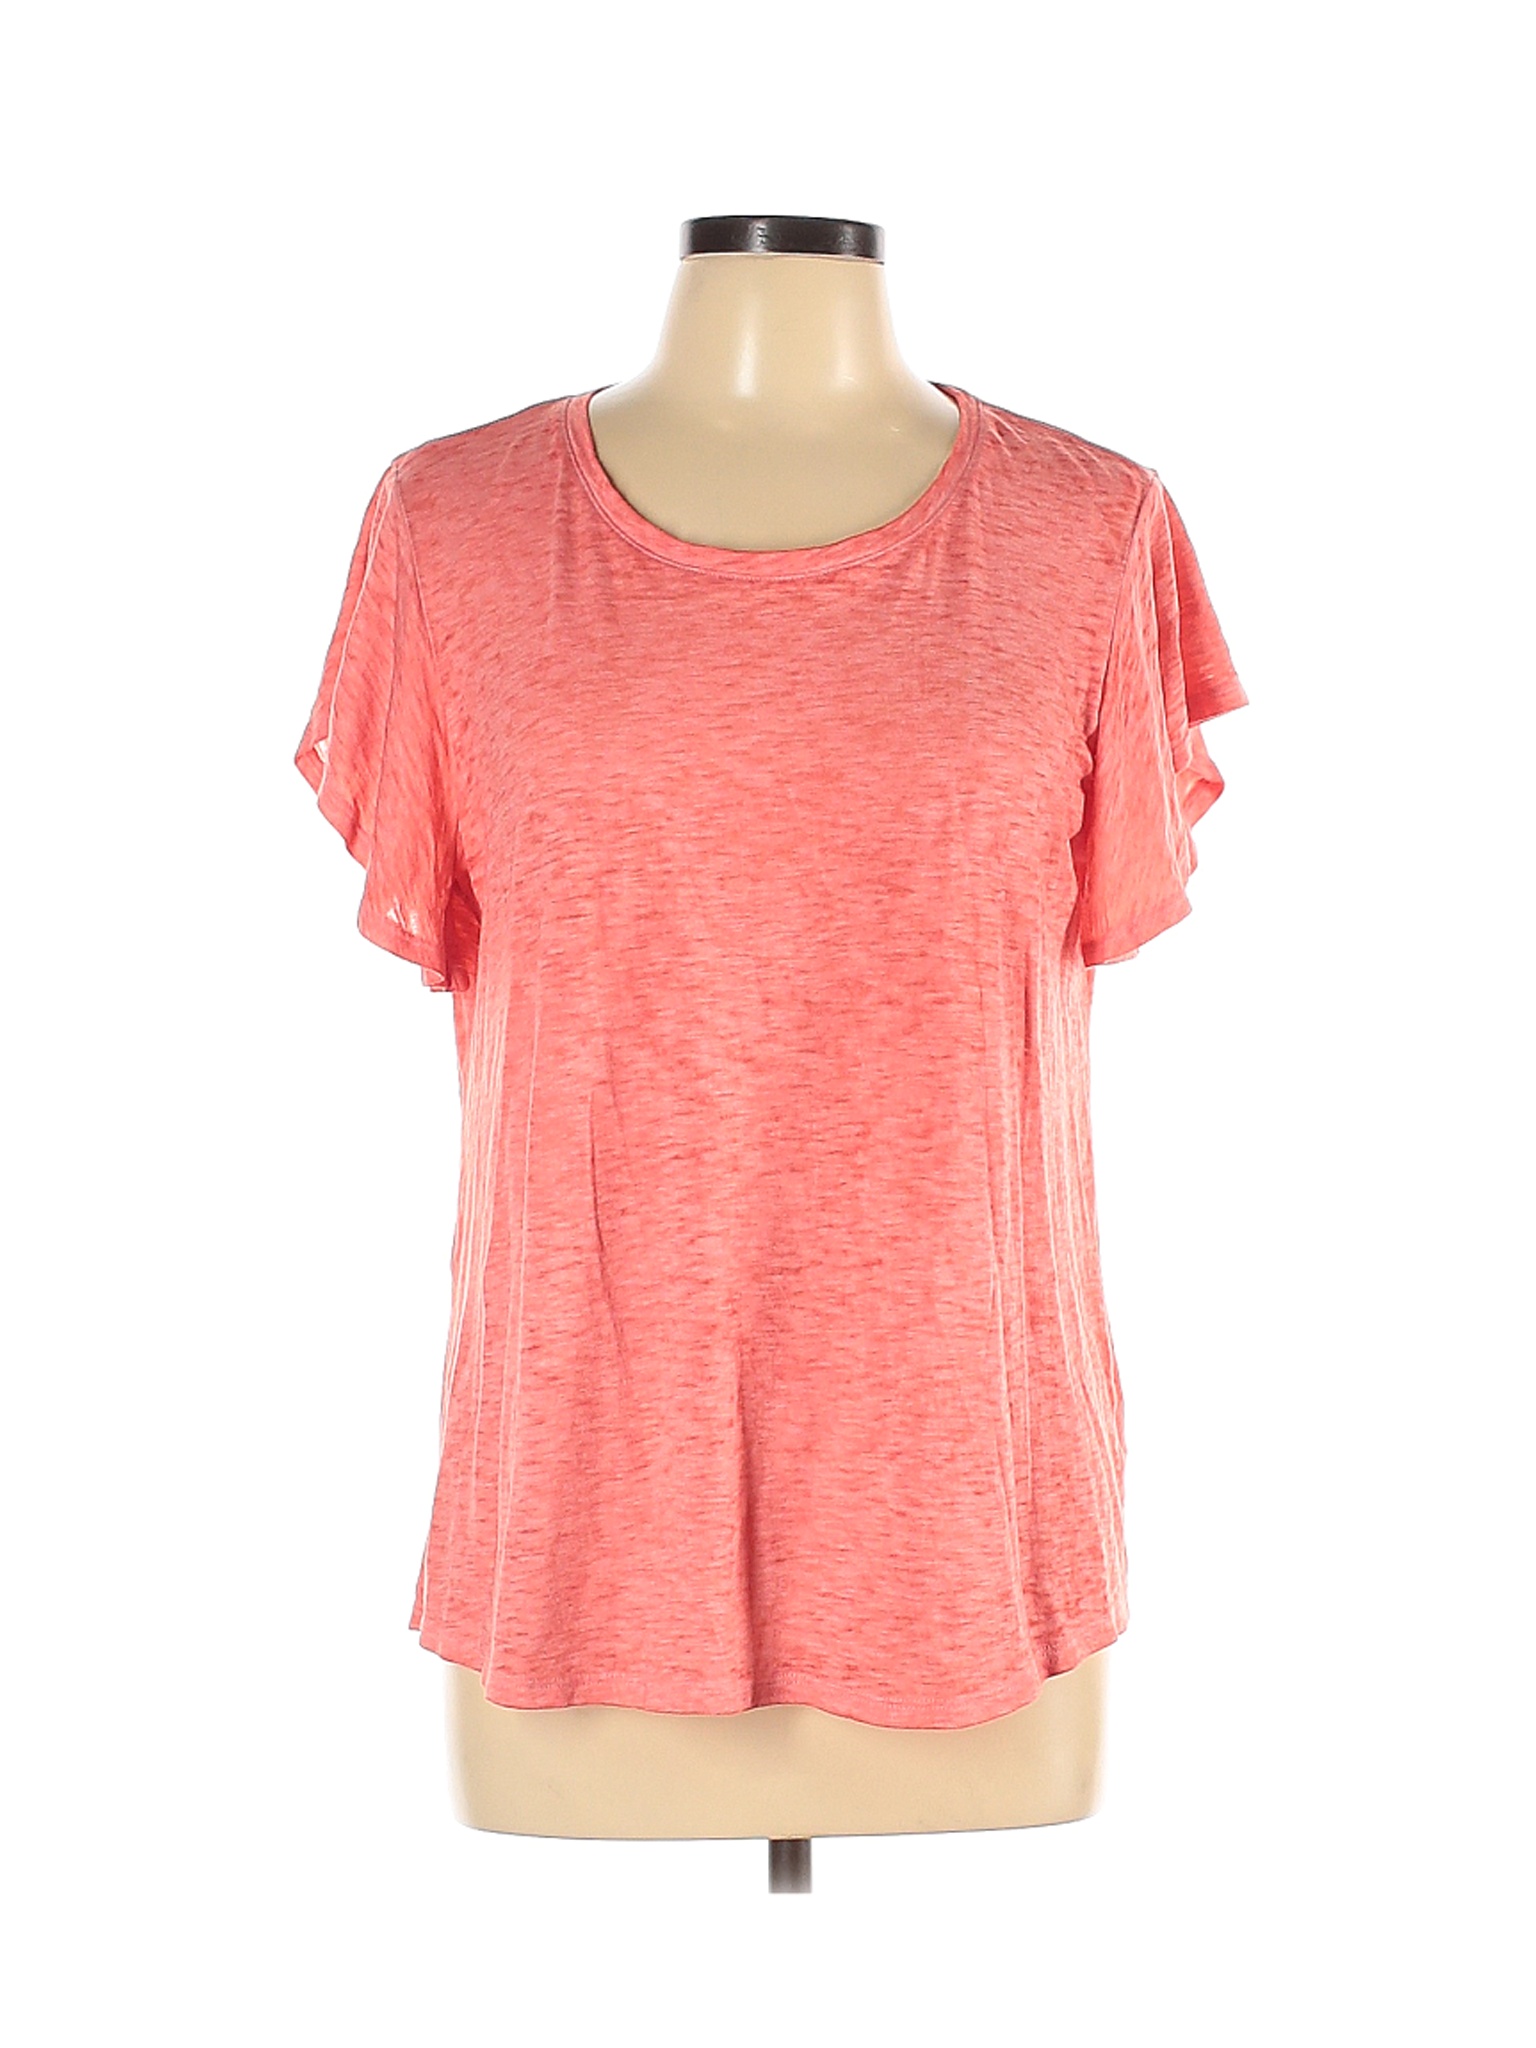 Sonoma Goods for Life Women Pink Short Sleeve Top L | eBay